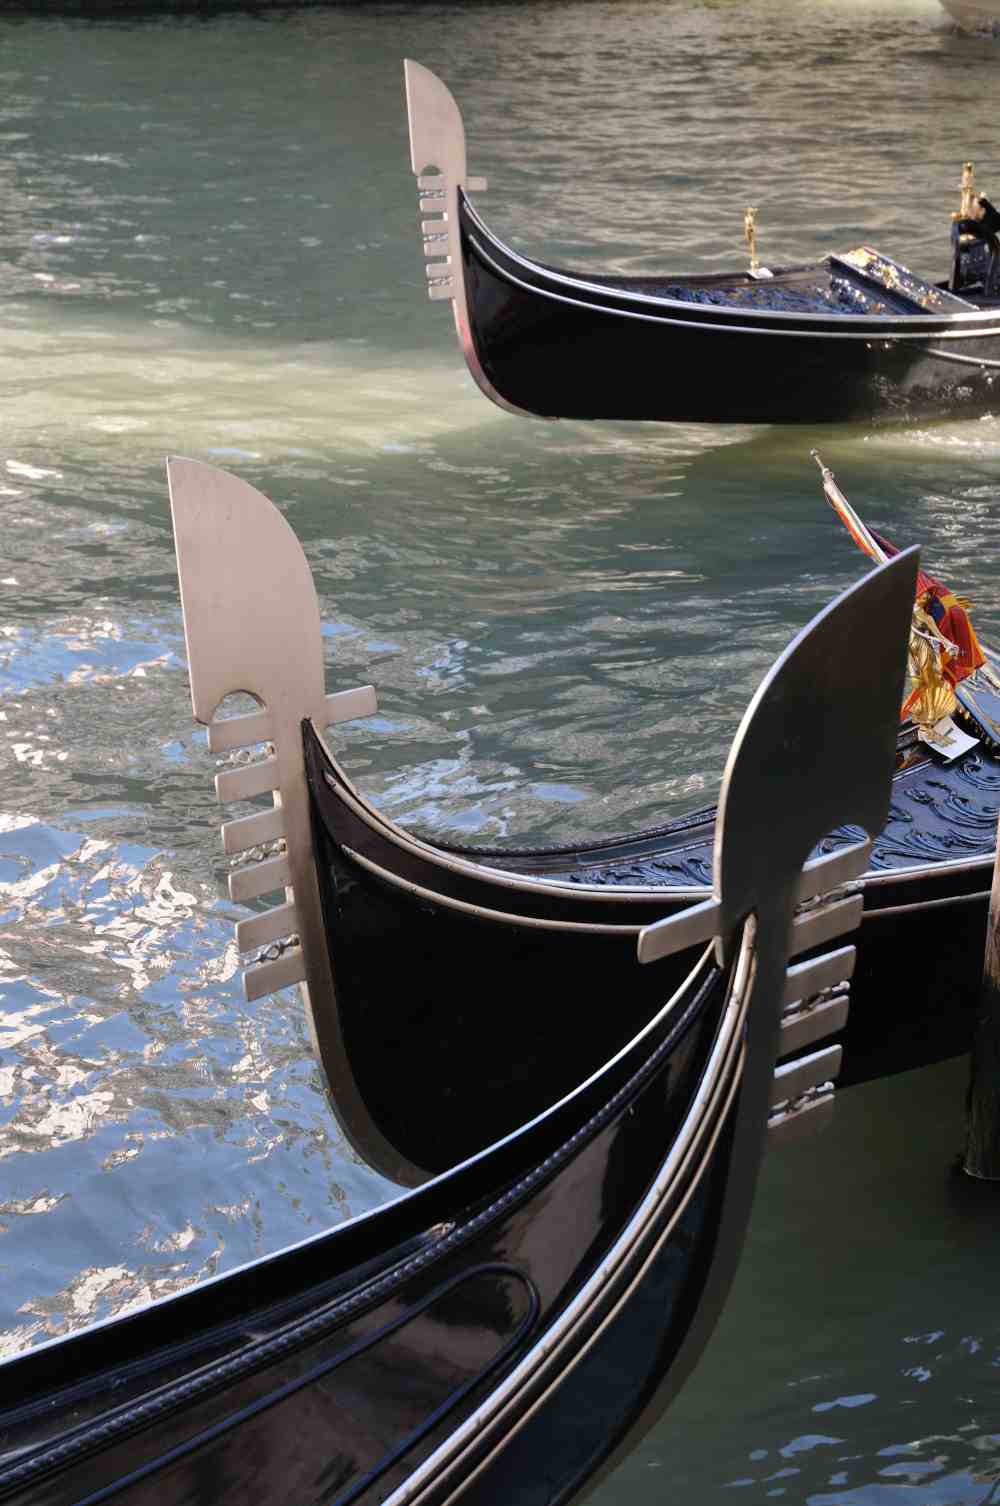 History of gondola iron prow (Photo by Gérard GRIFFAY on Unsplash)